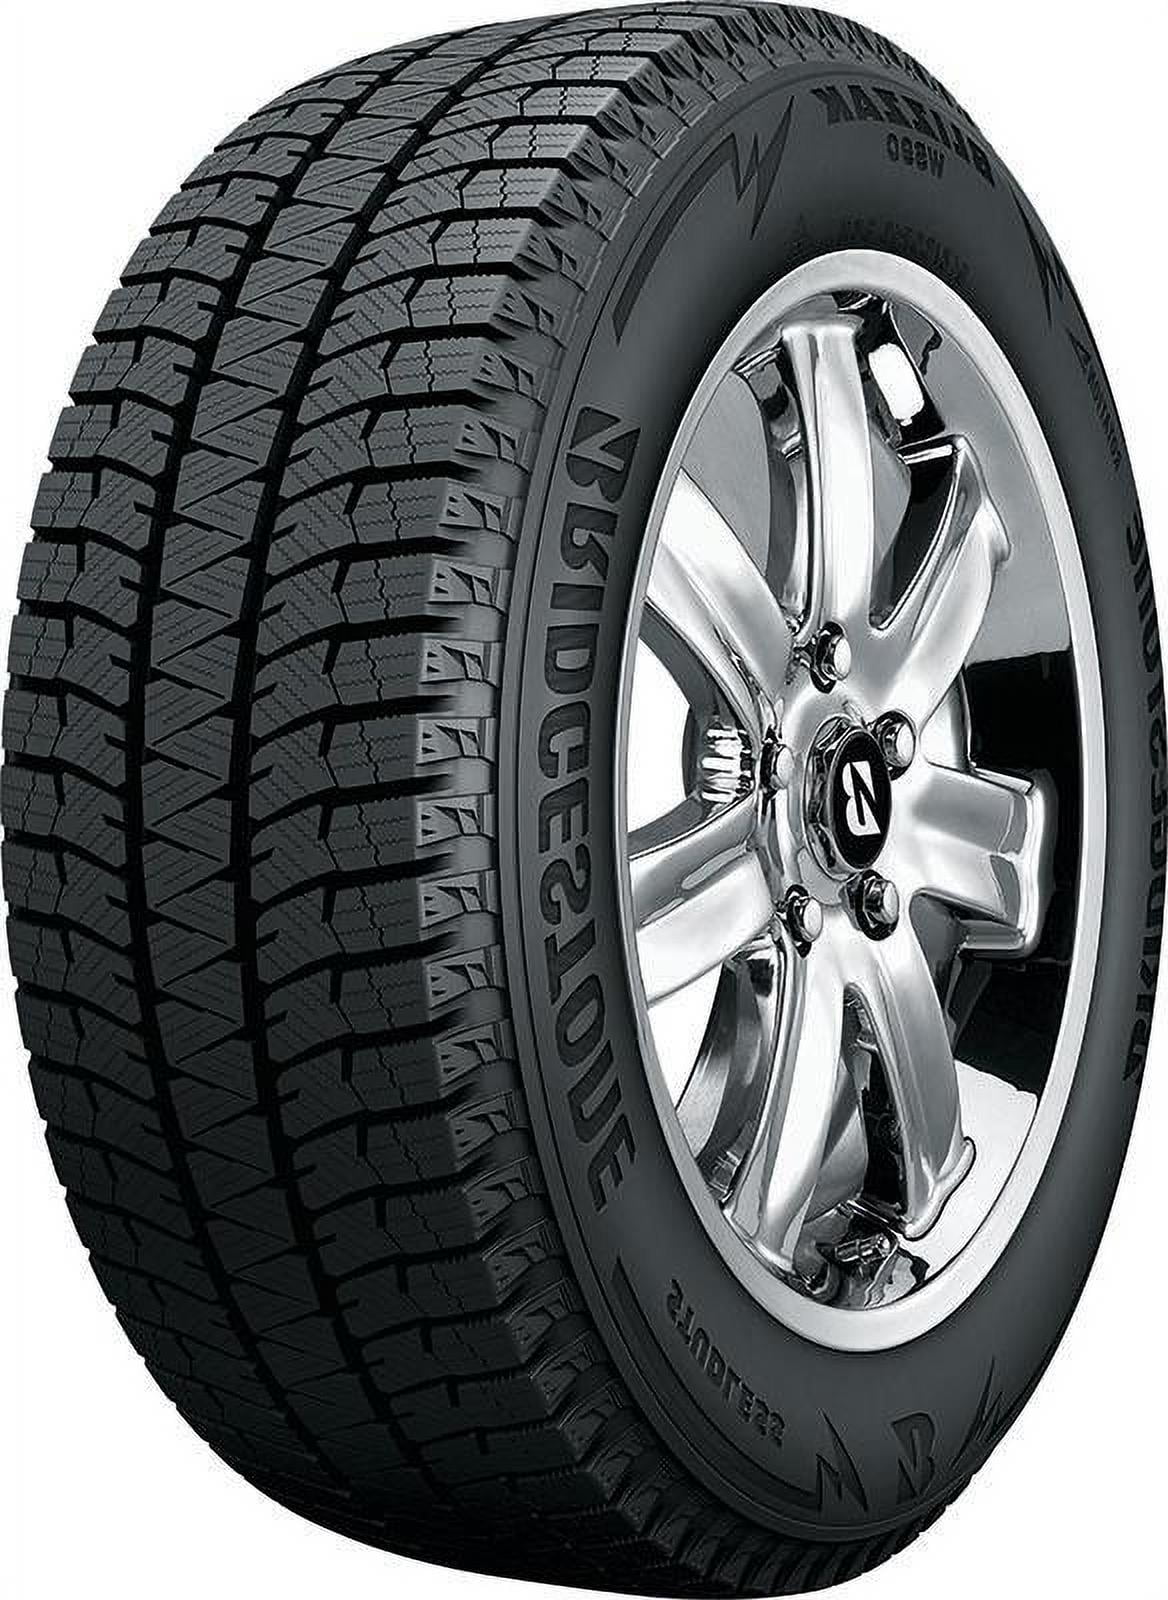 Bridgestone Blizzak WS90 Winter 245/50R18 104H XL Passenger Tire